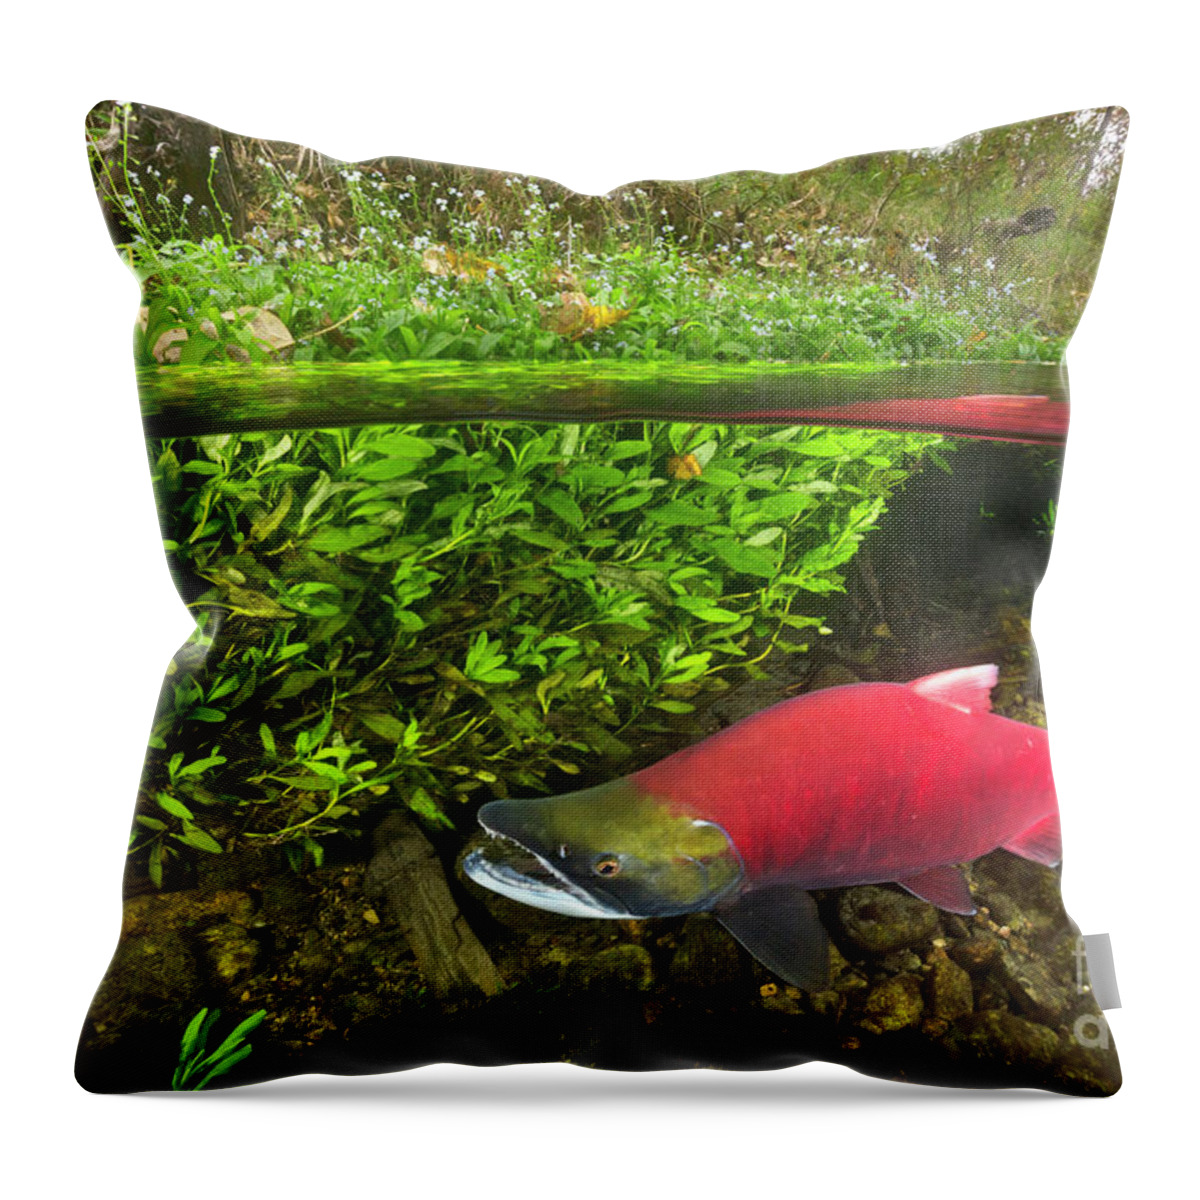 00551433 Throw Pillow featuring the photograph Sockeye Salmon Migrating by Yva Momatiuk John Eastcott